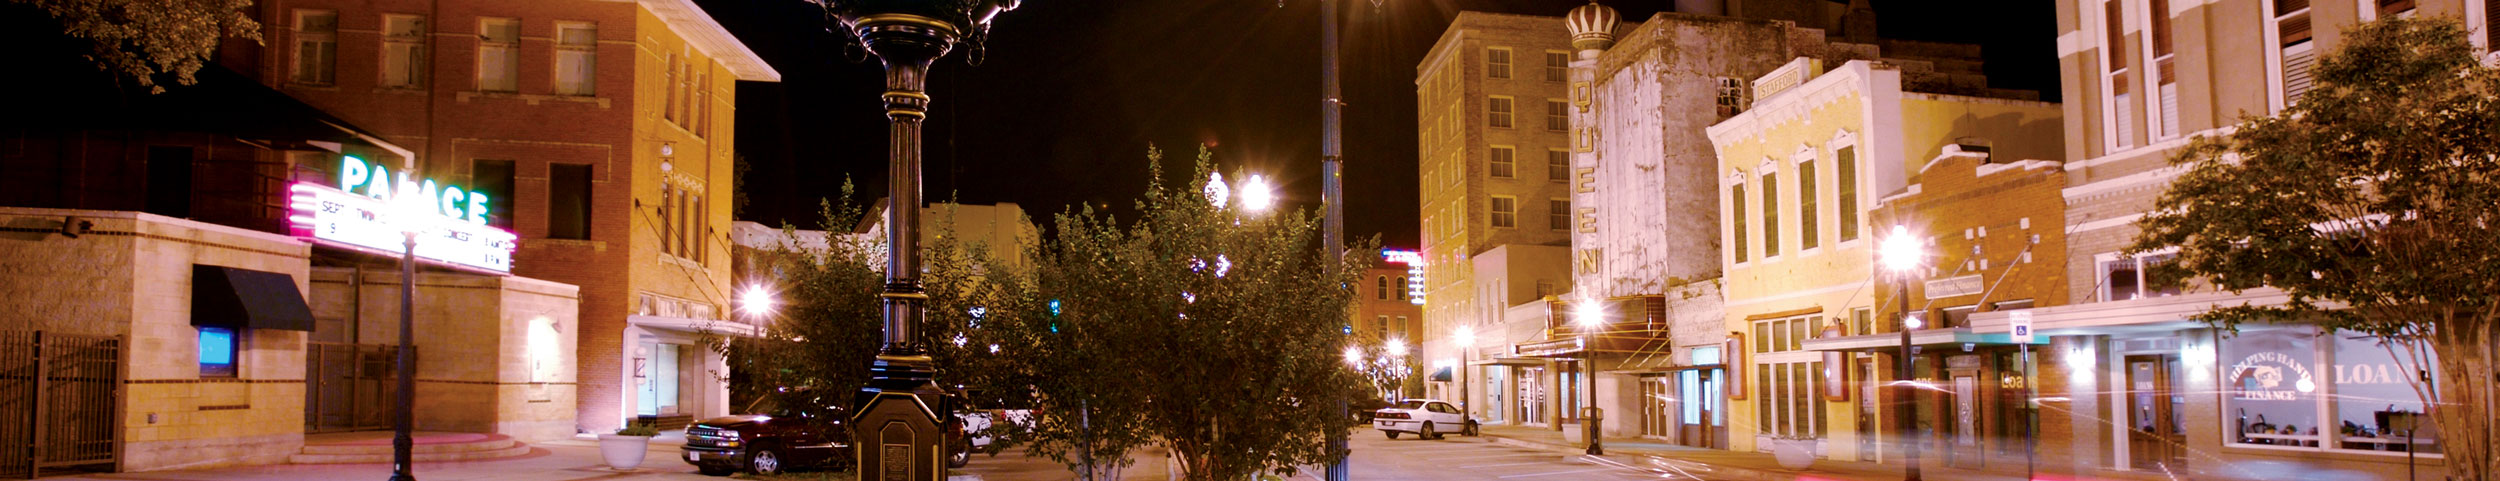 Downtown Bryan at night